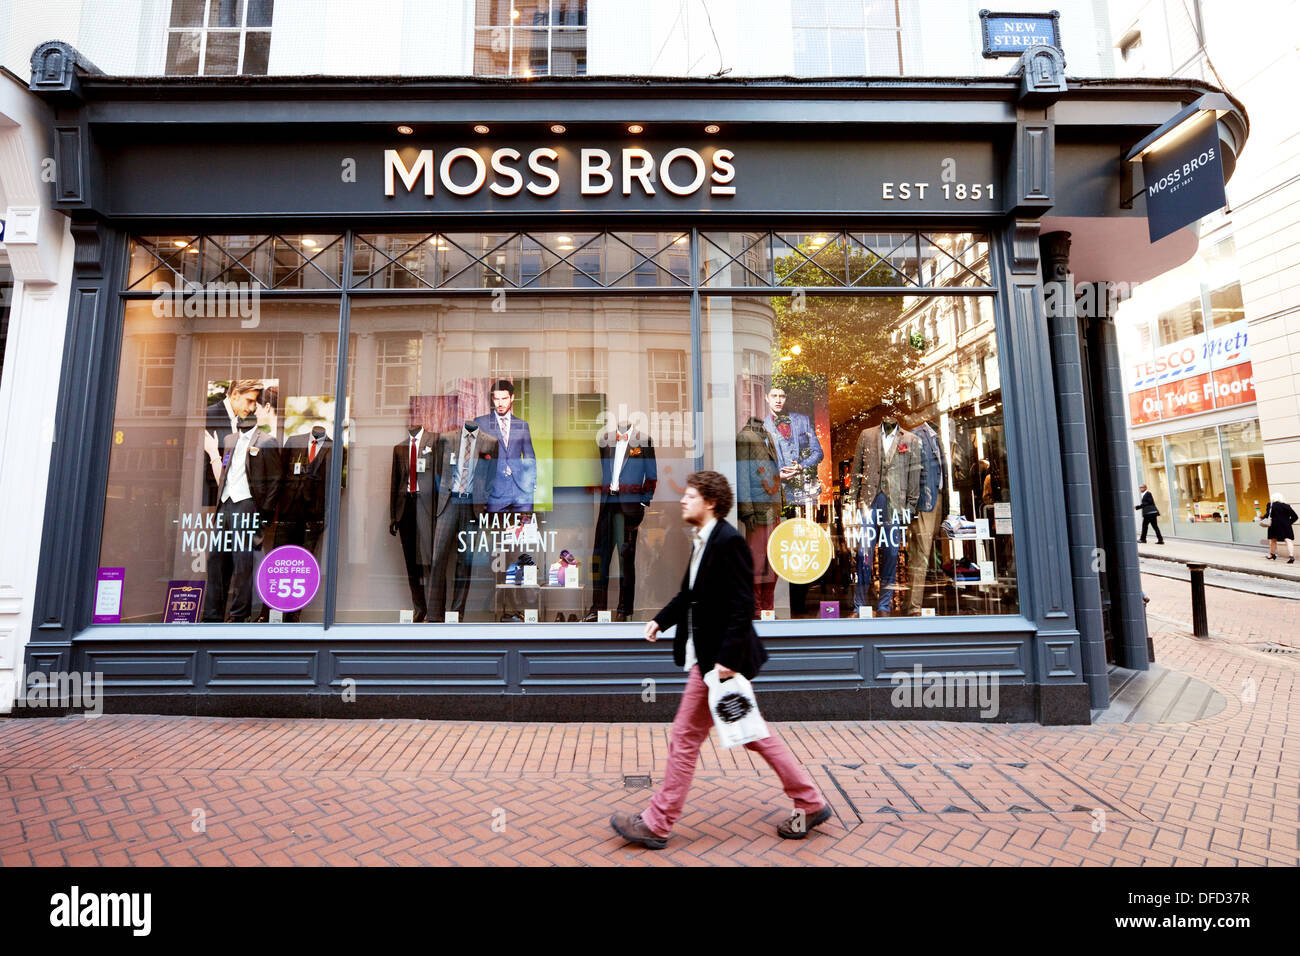 Moss Bros shop, New Street, Birmingham city centre, UK Stock Photo